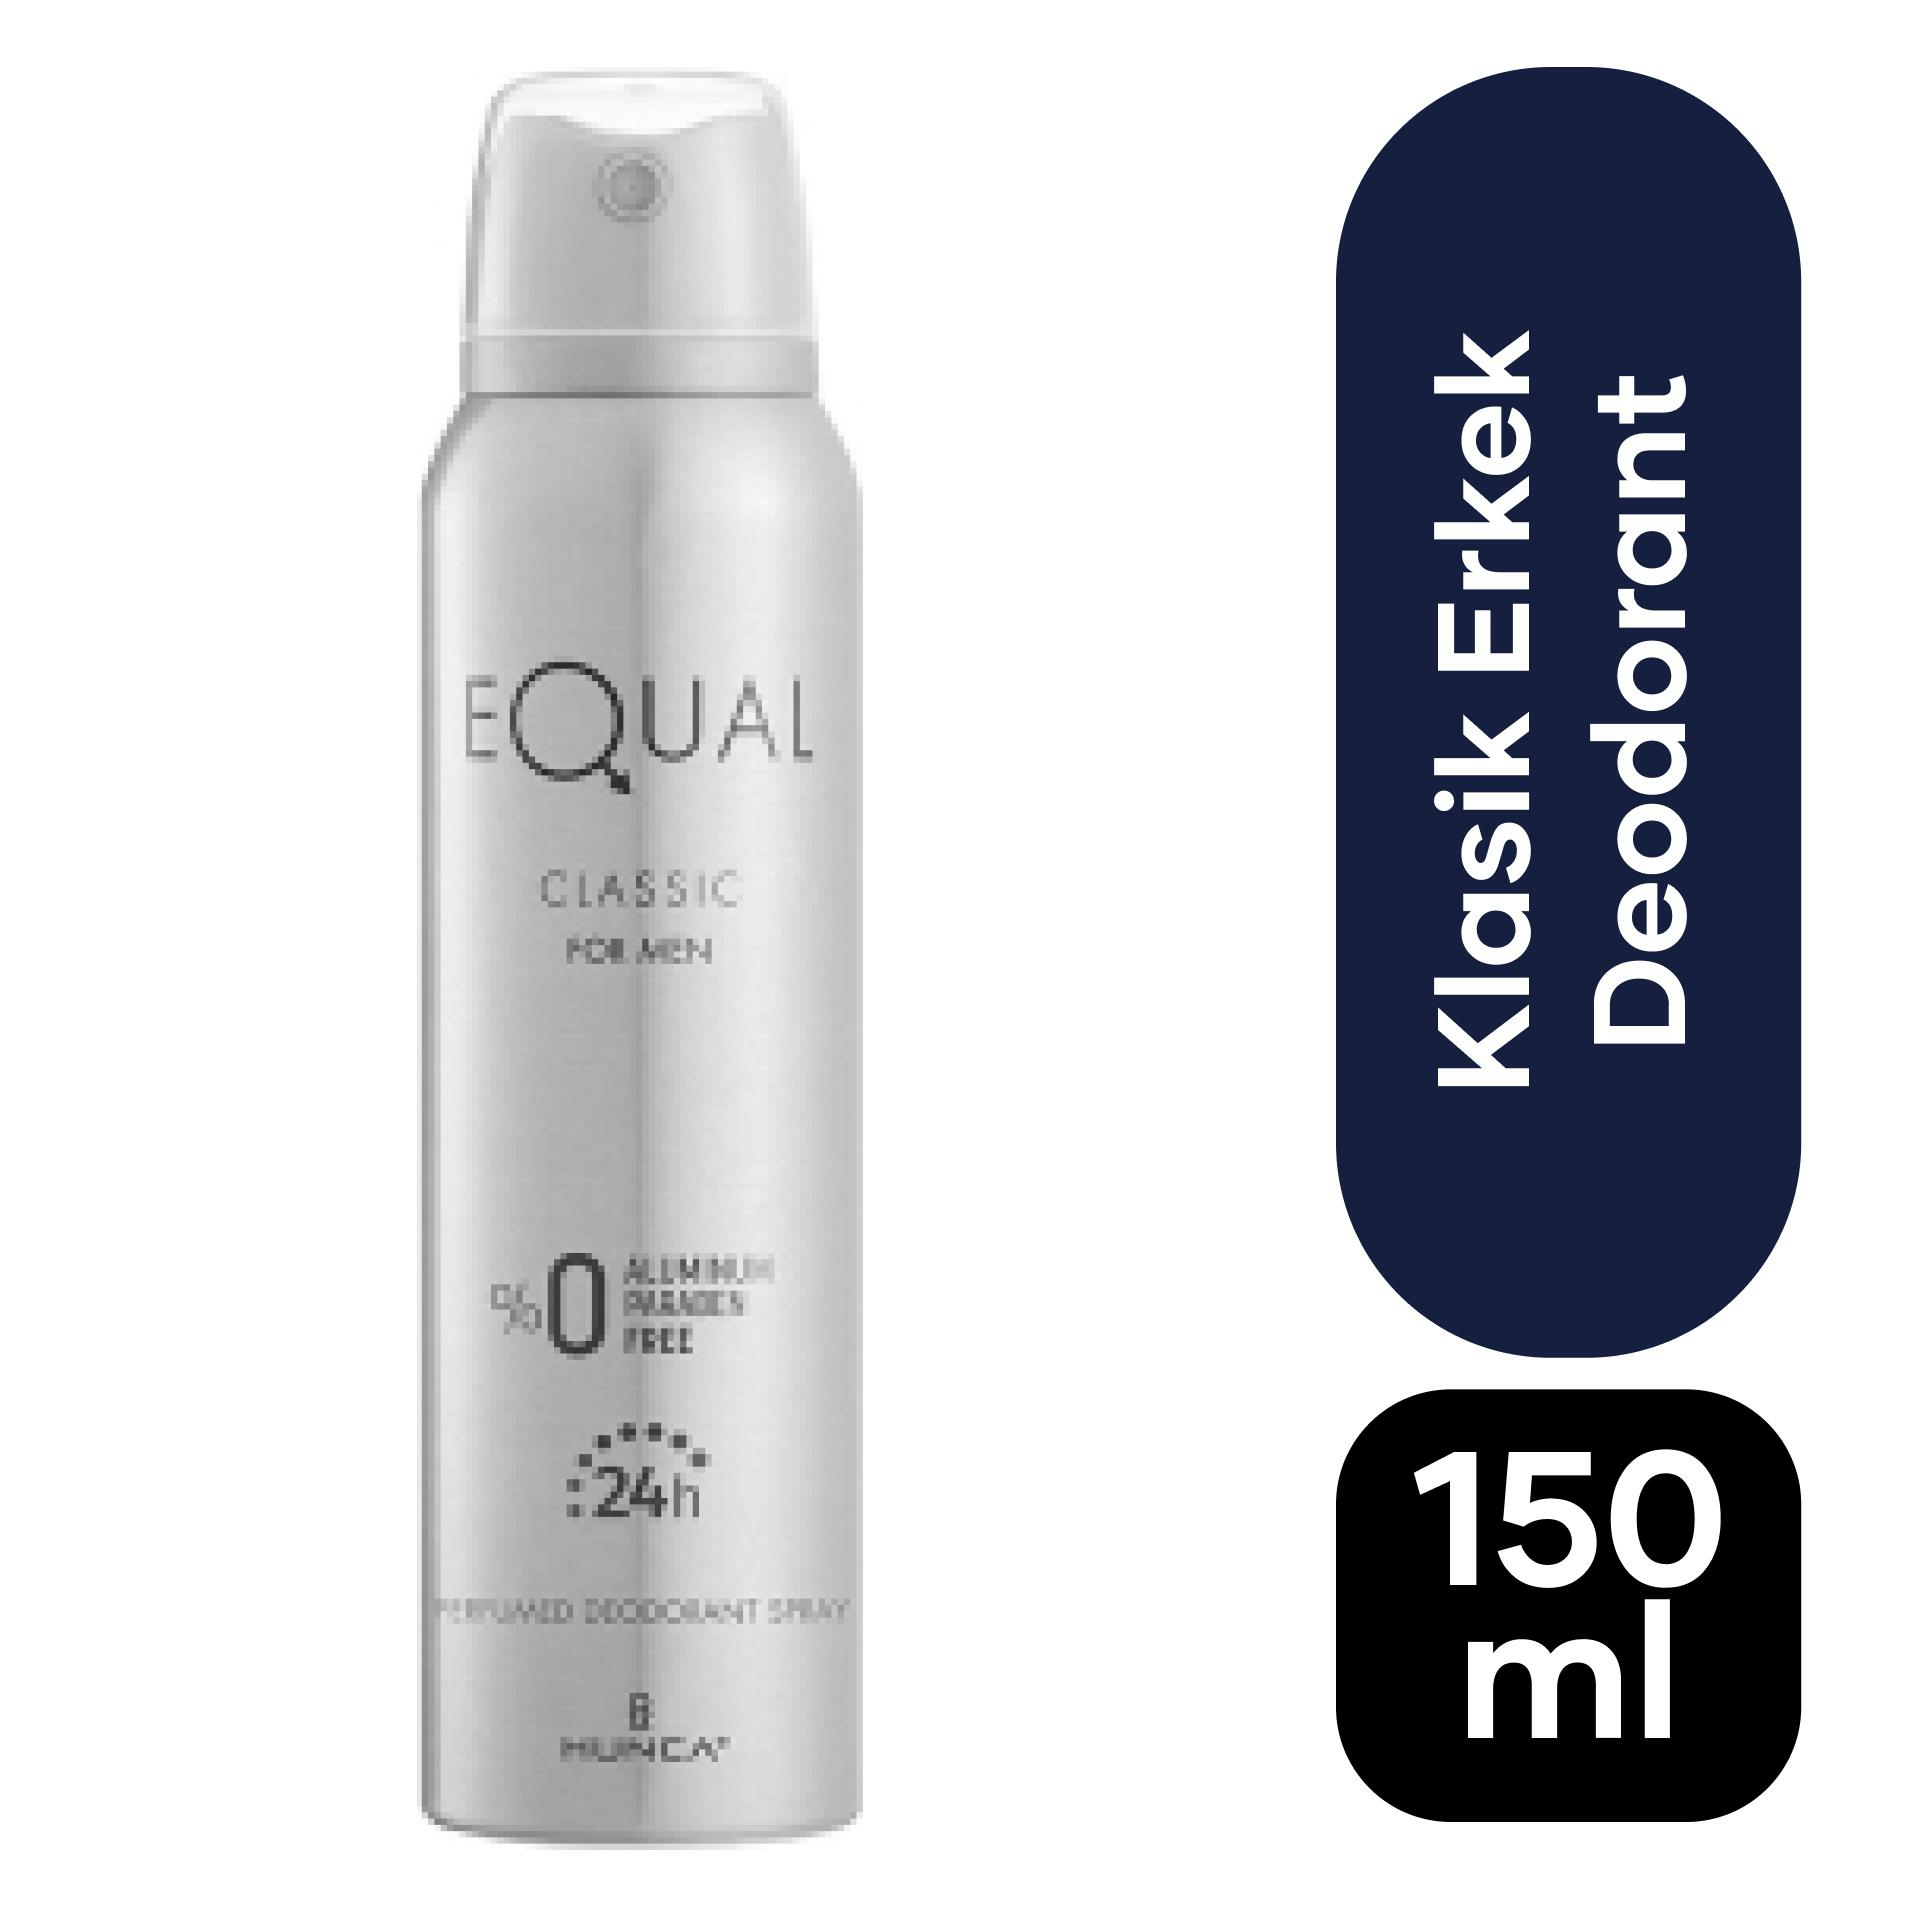 Equal Deodorant For Men 150ml